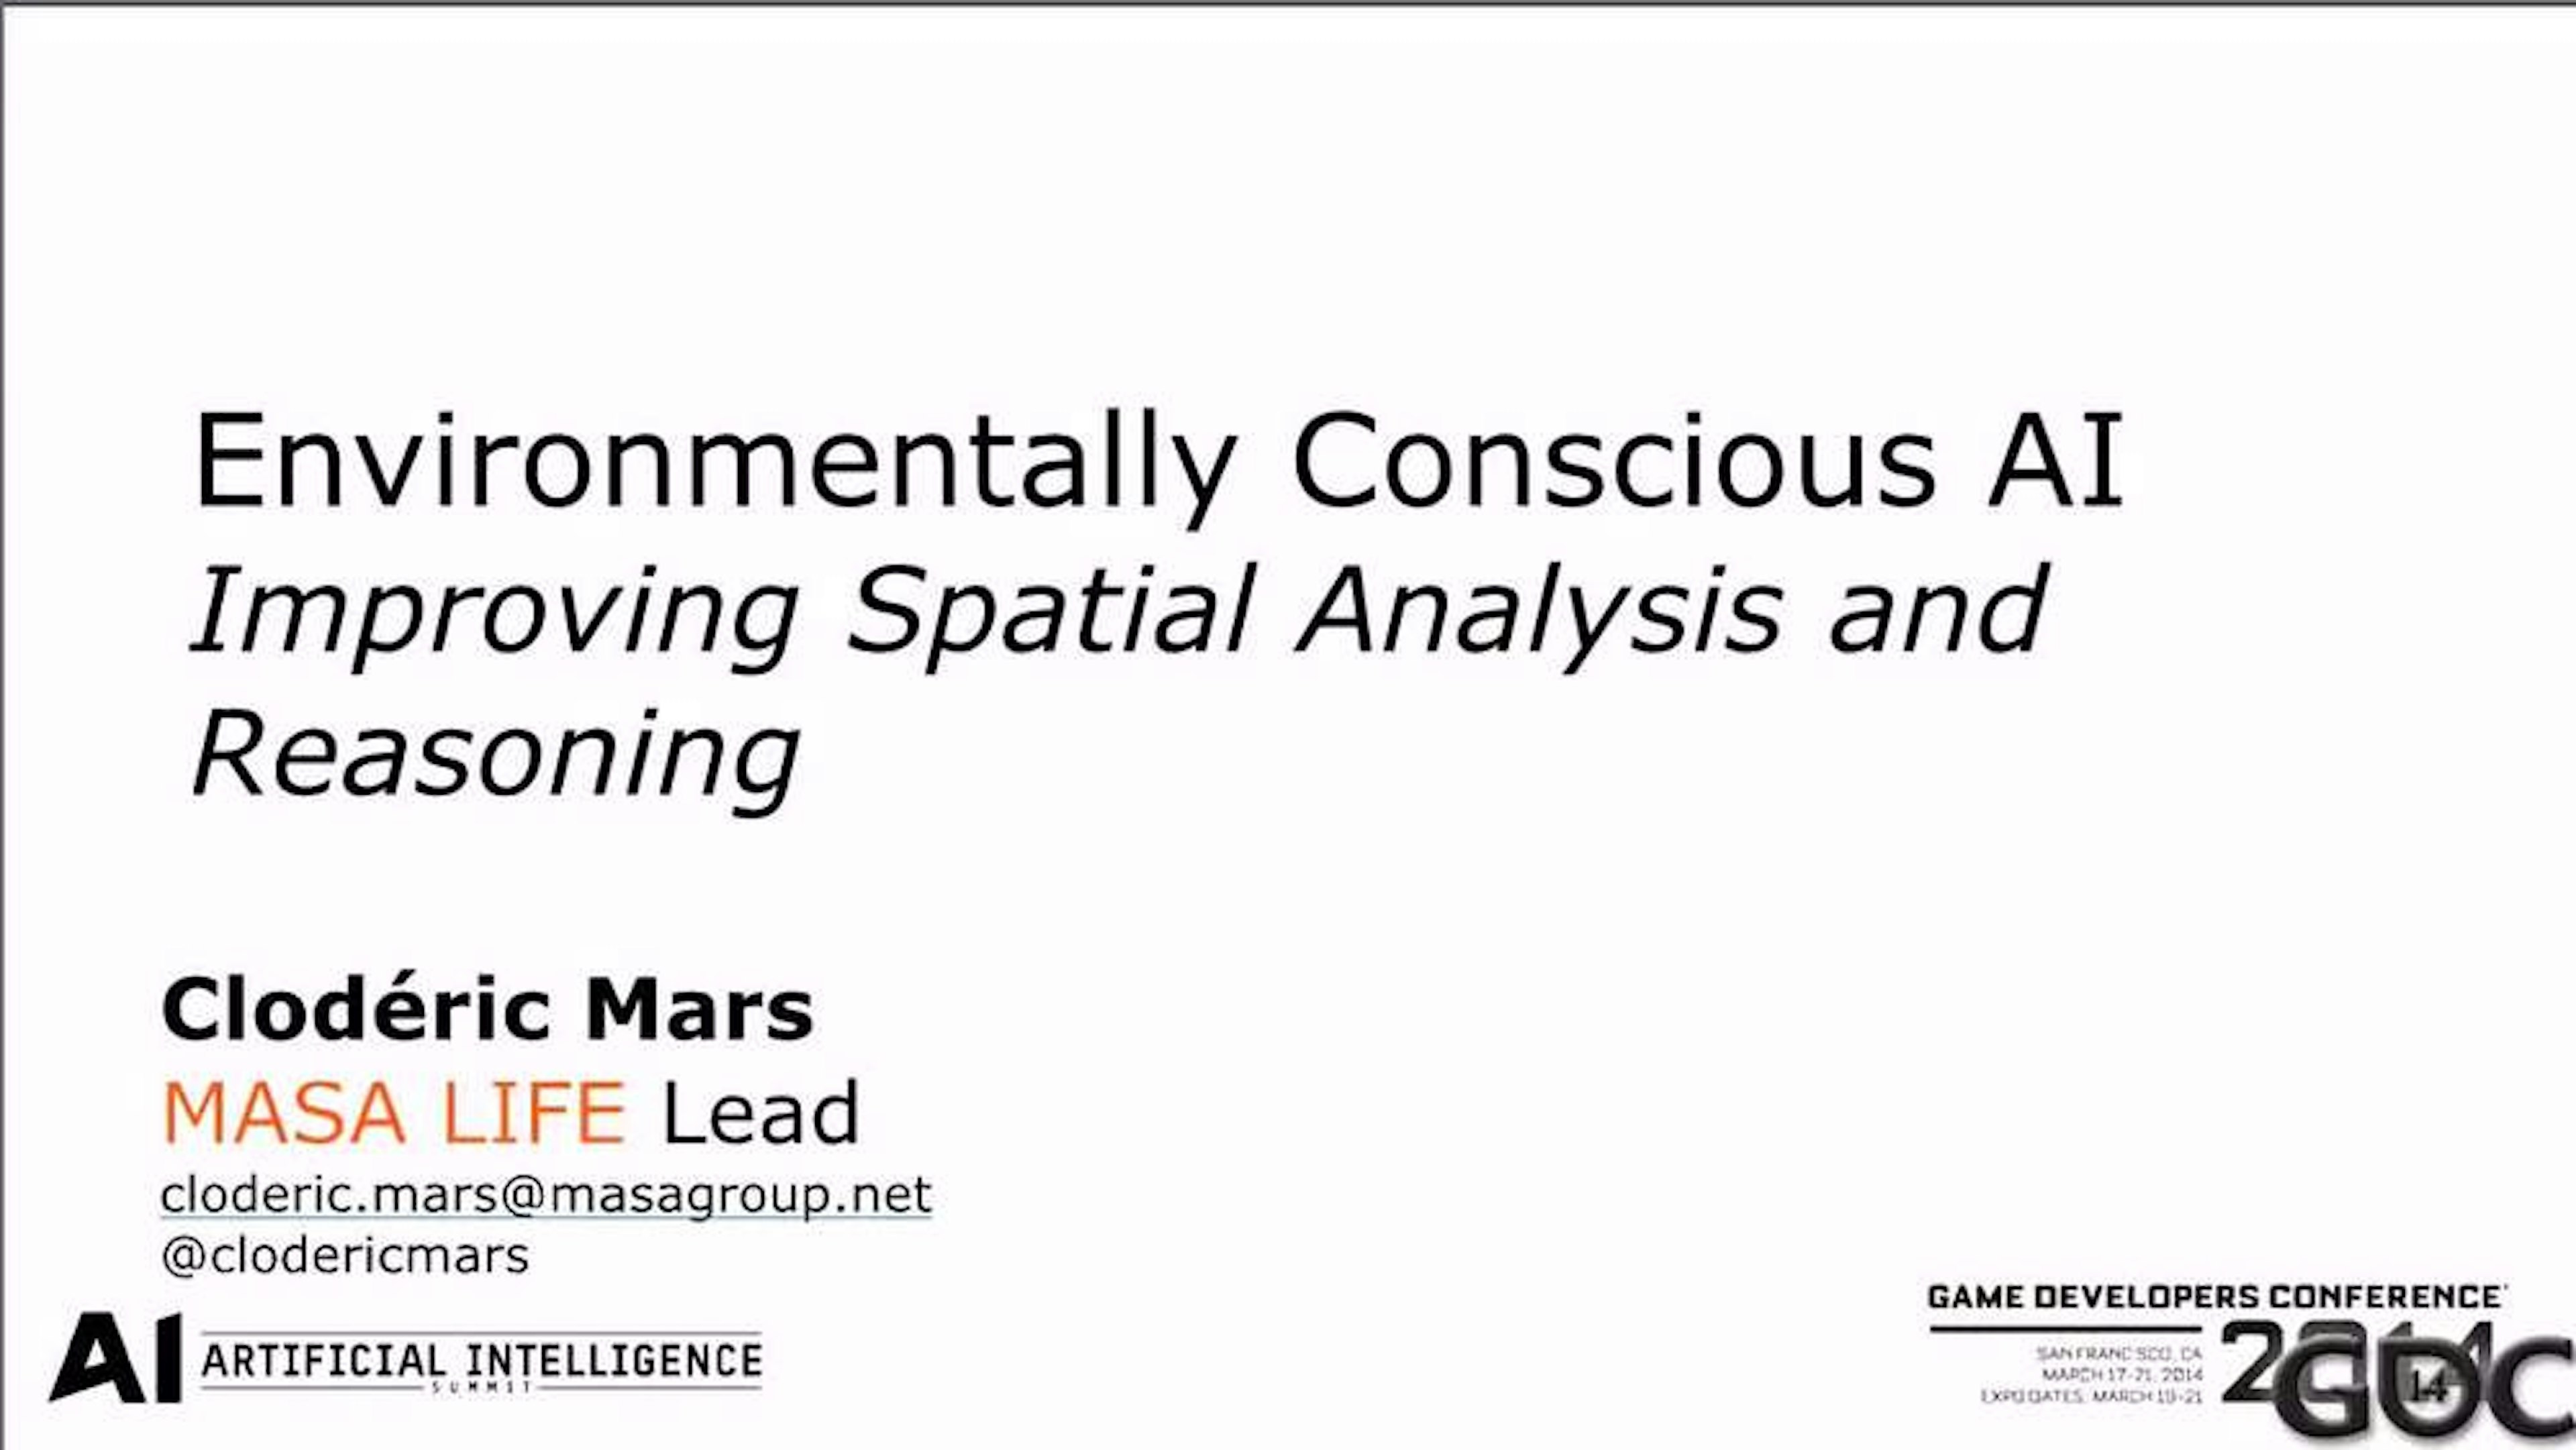 GDC 2014 AI Summit - Environmentally Conscious AI: Improving Spatial Analysis
and Reasoning